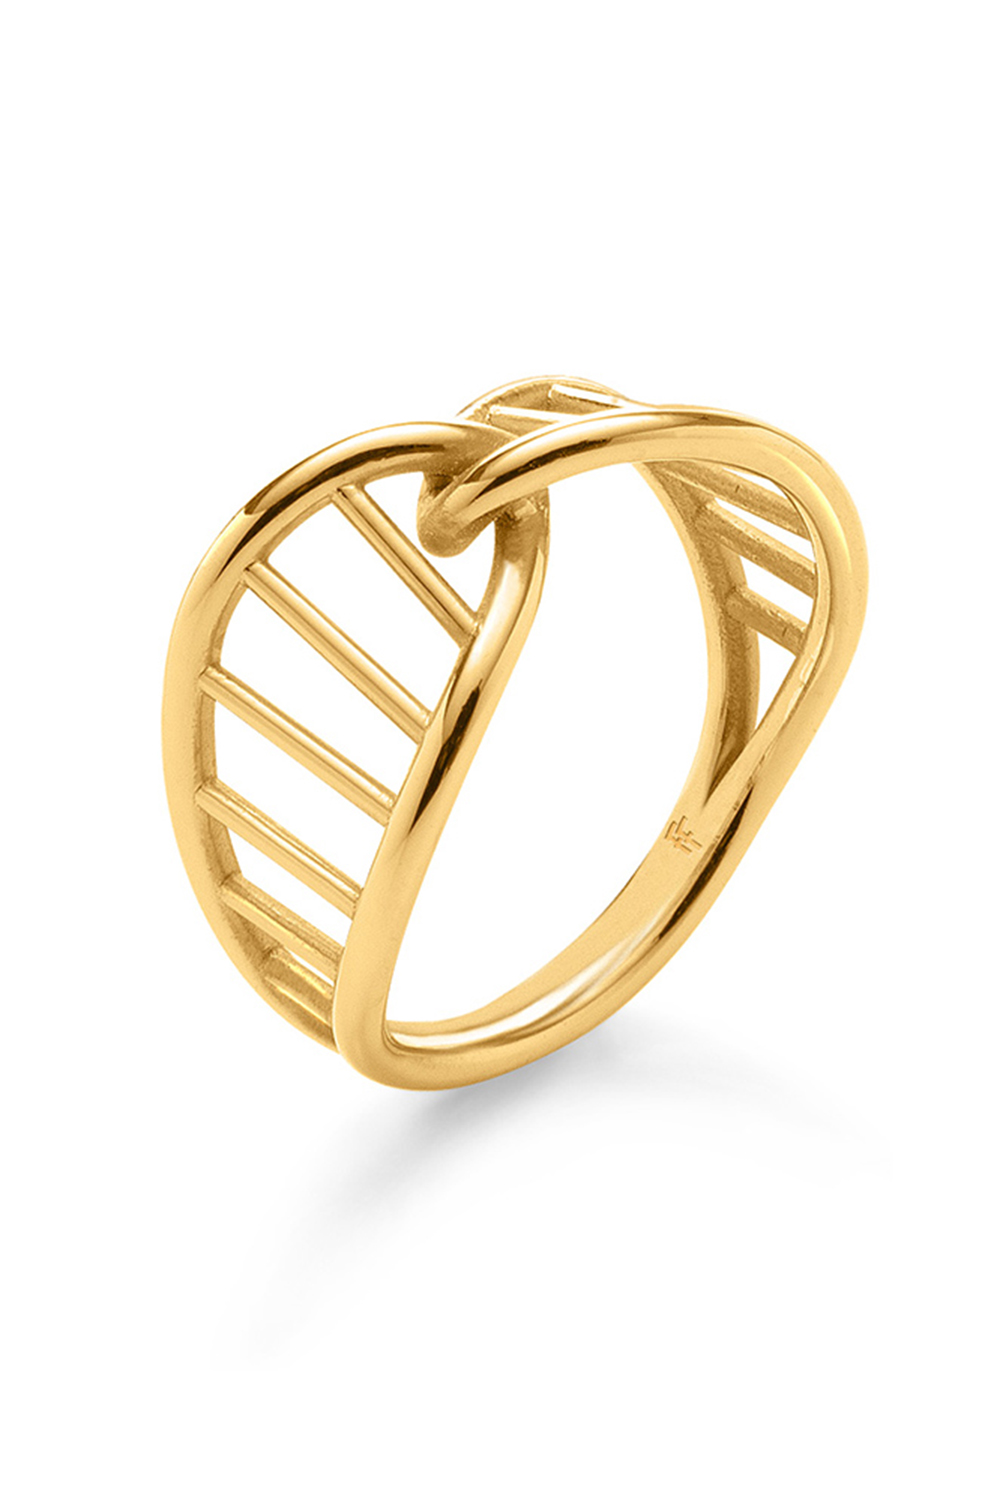 FOLLI FOLLIE – Γυναικειo ασημενιο δαχτυλιδι FOLLI FOLLIE STYLE DNA χρυσο